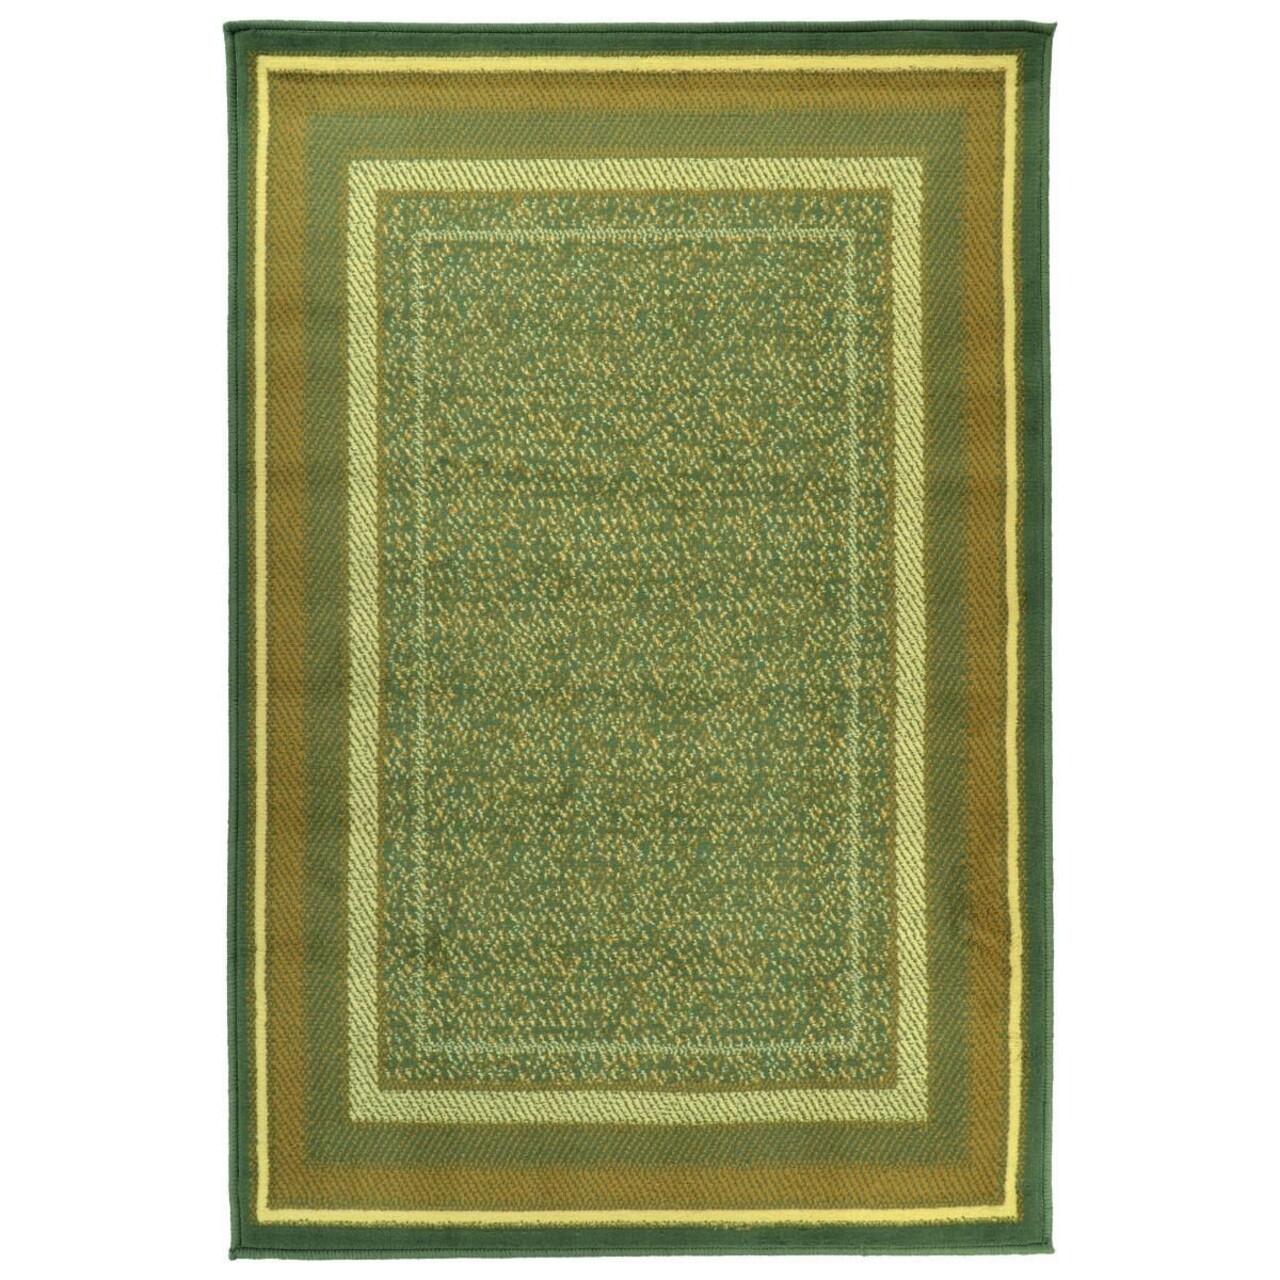 Home szőnyeg, Decorino, 67x120 cm, polipropilén, tarka